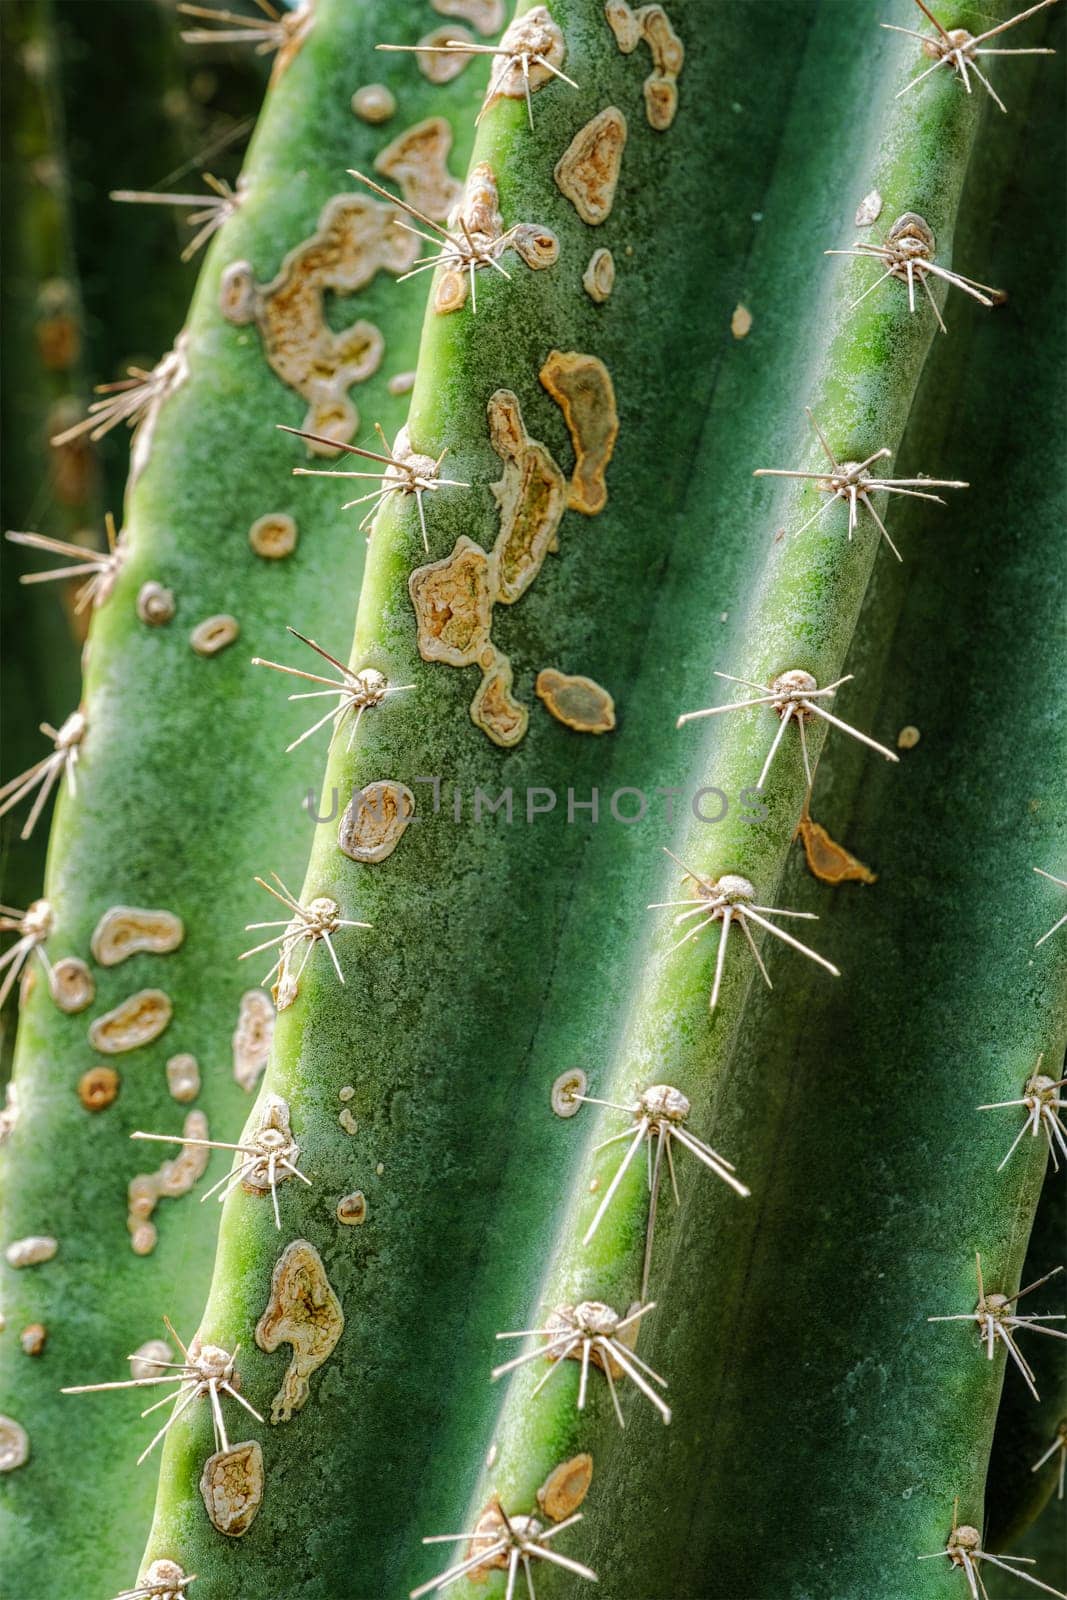 Cereus hildmannianus aka Queen of the night cactus close up by dimol